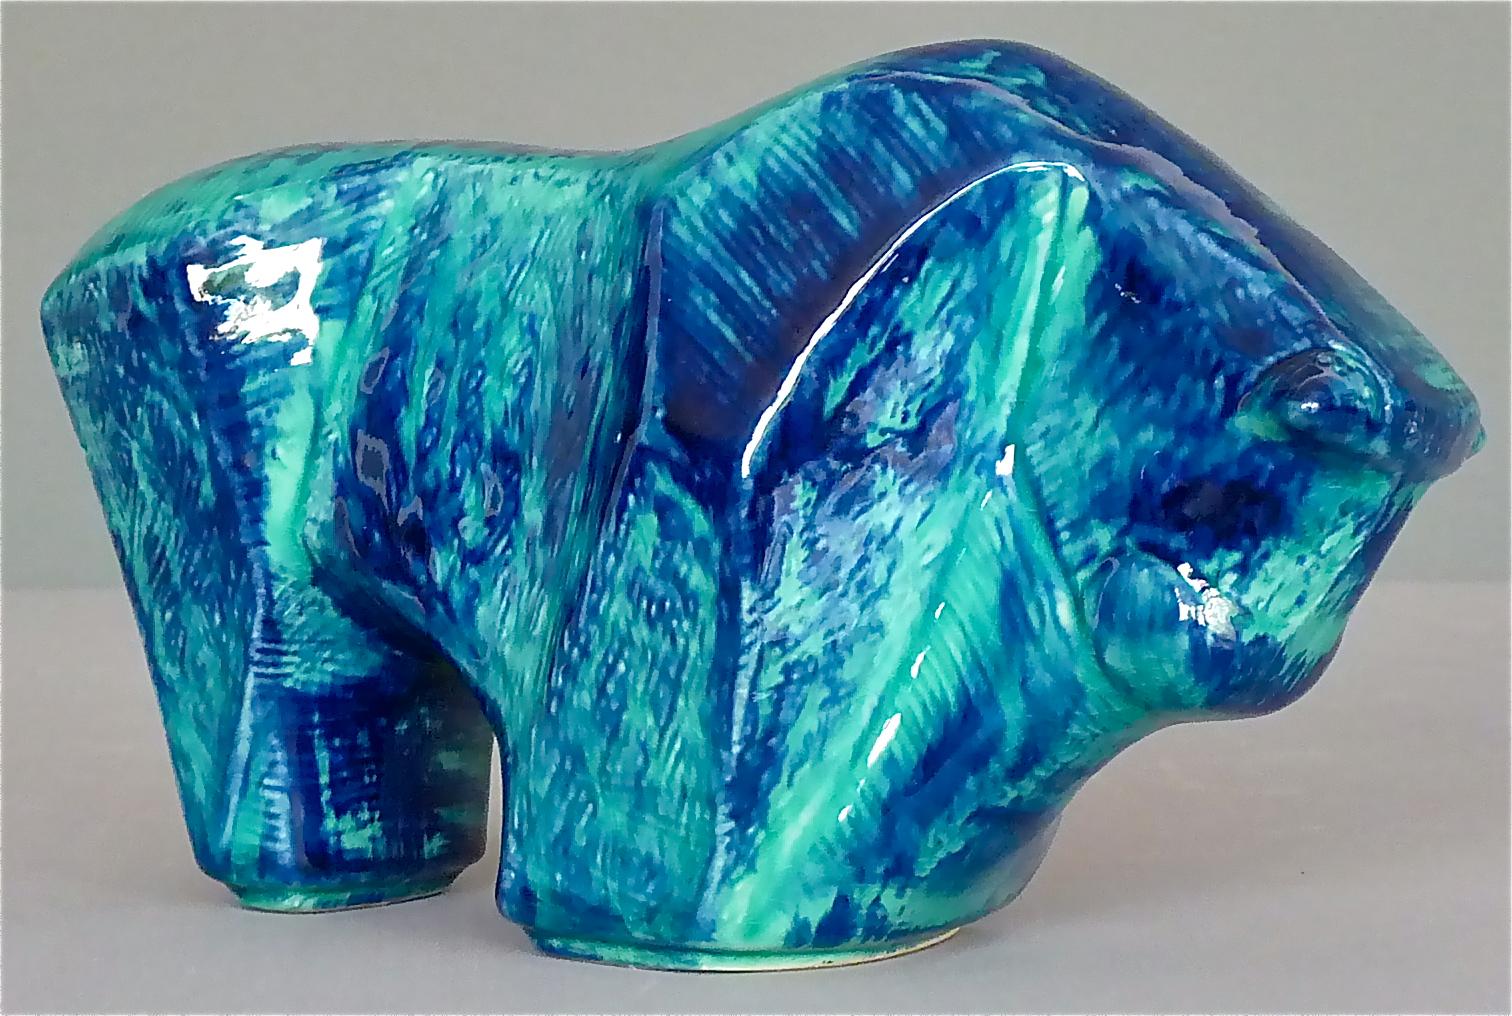 Cubist Bison Bull Sculpture Art Deco Style Blue Ceramic Italy 1970s Bitossi Era For Sale 1